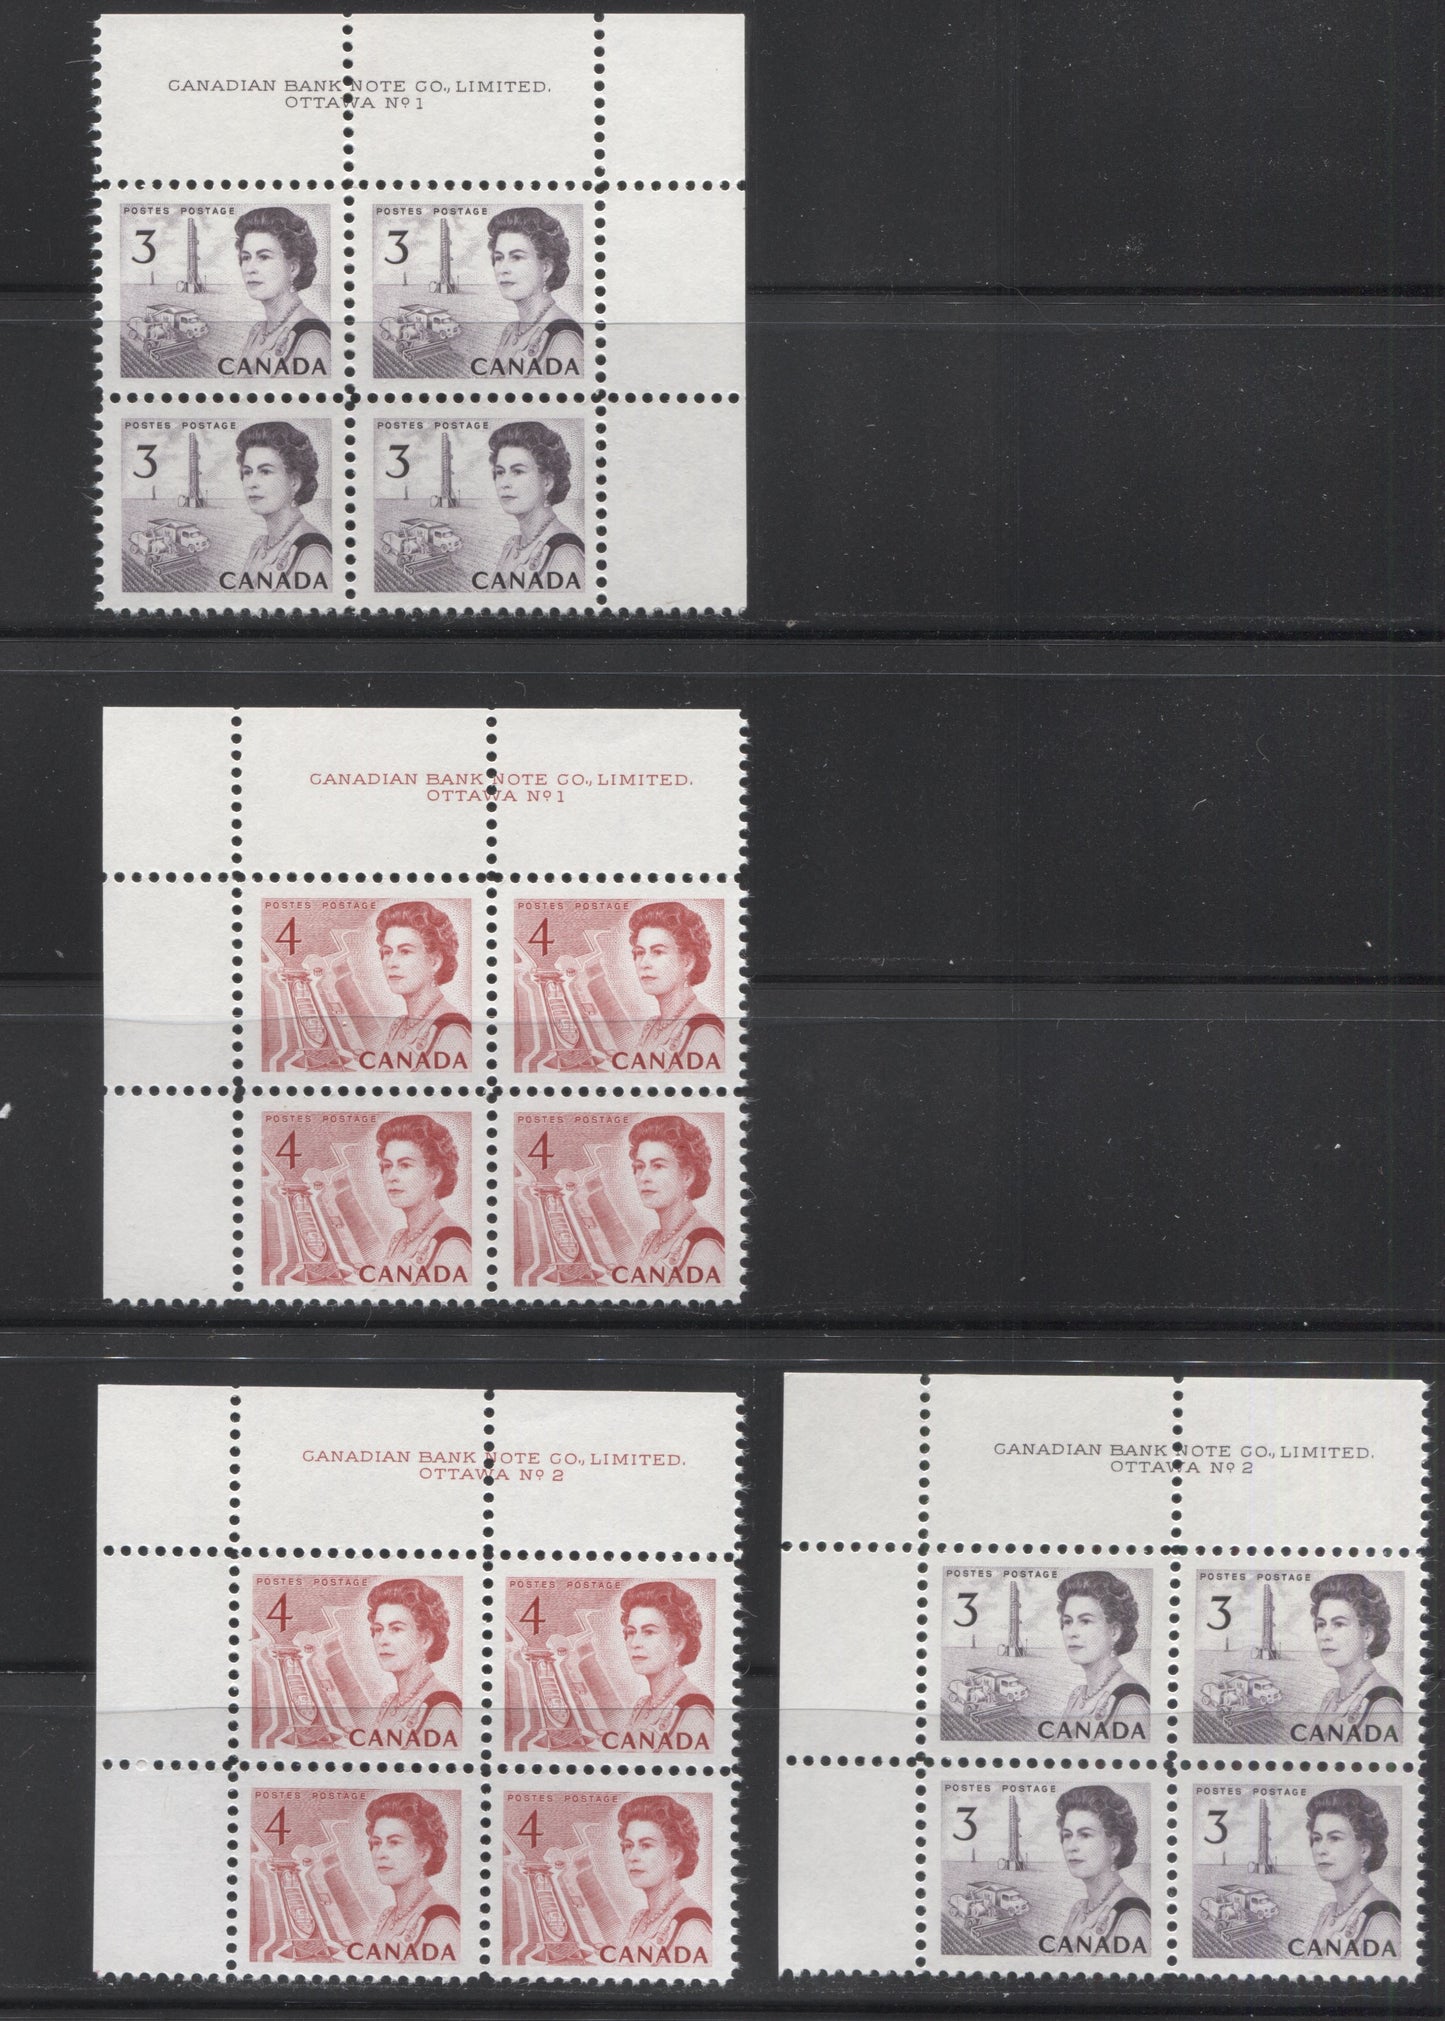 Lot 46 Canada #456-457 3c & 4c Dull Purple & Carmine Rose Queen Elizabeth II, 1967-1973 Centennial Issue, 5 VFNH UL & UR Plates 1-2 Blocks Of 4 On Non & Dull Fluorescent Papers